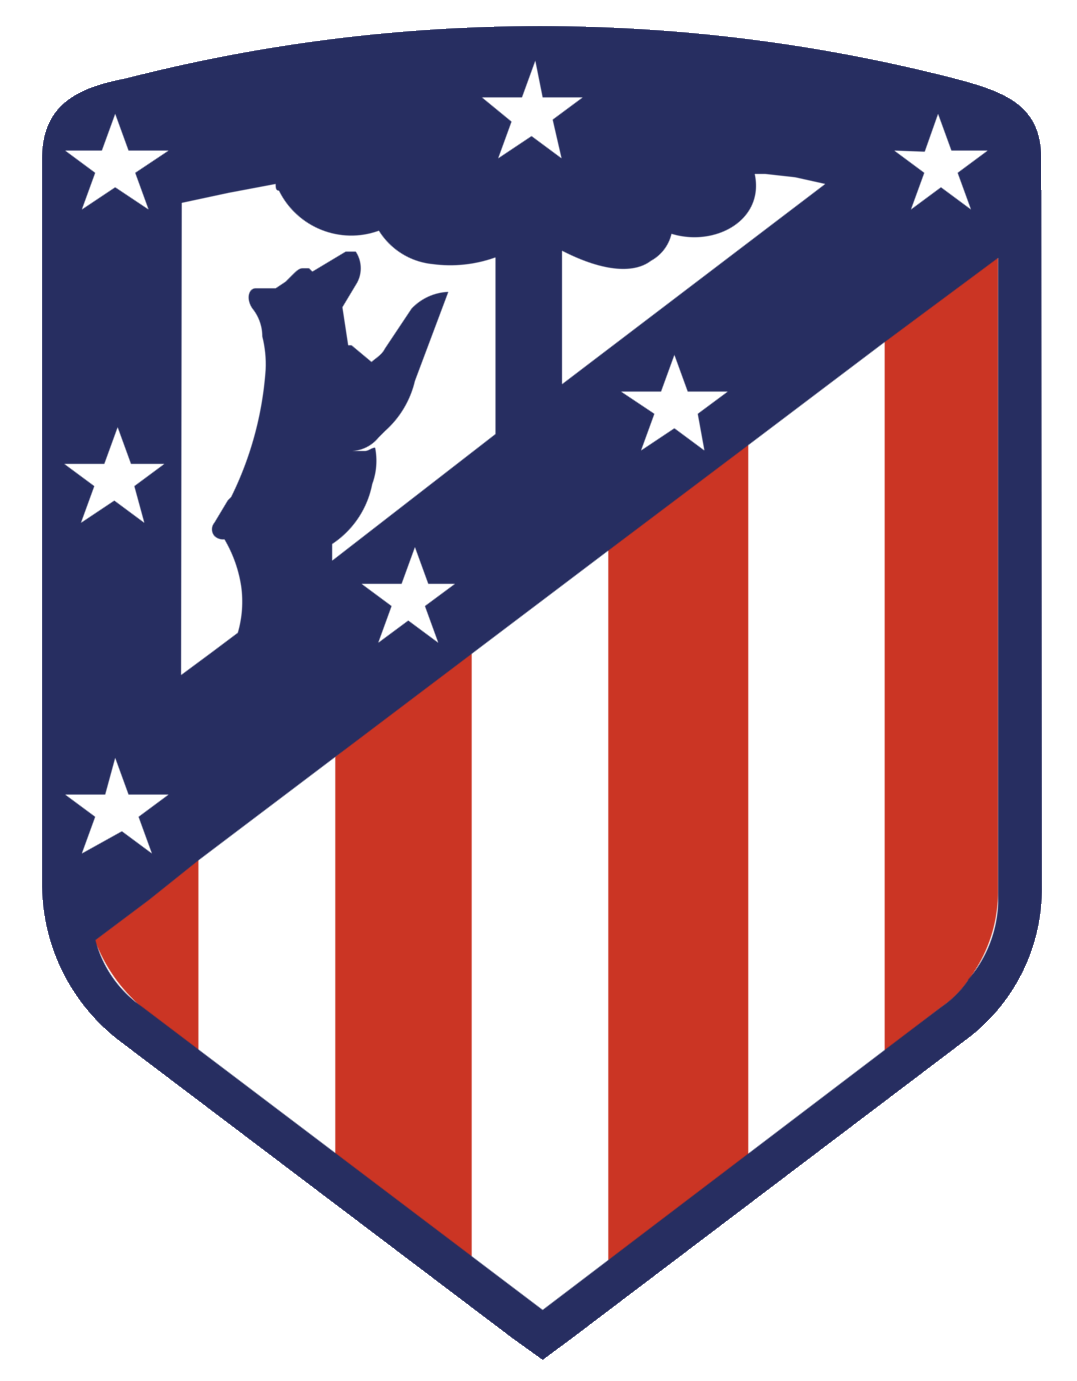 Wappen Club Atlético de Madrid diverse